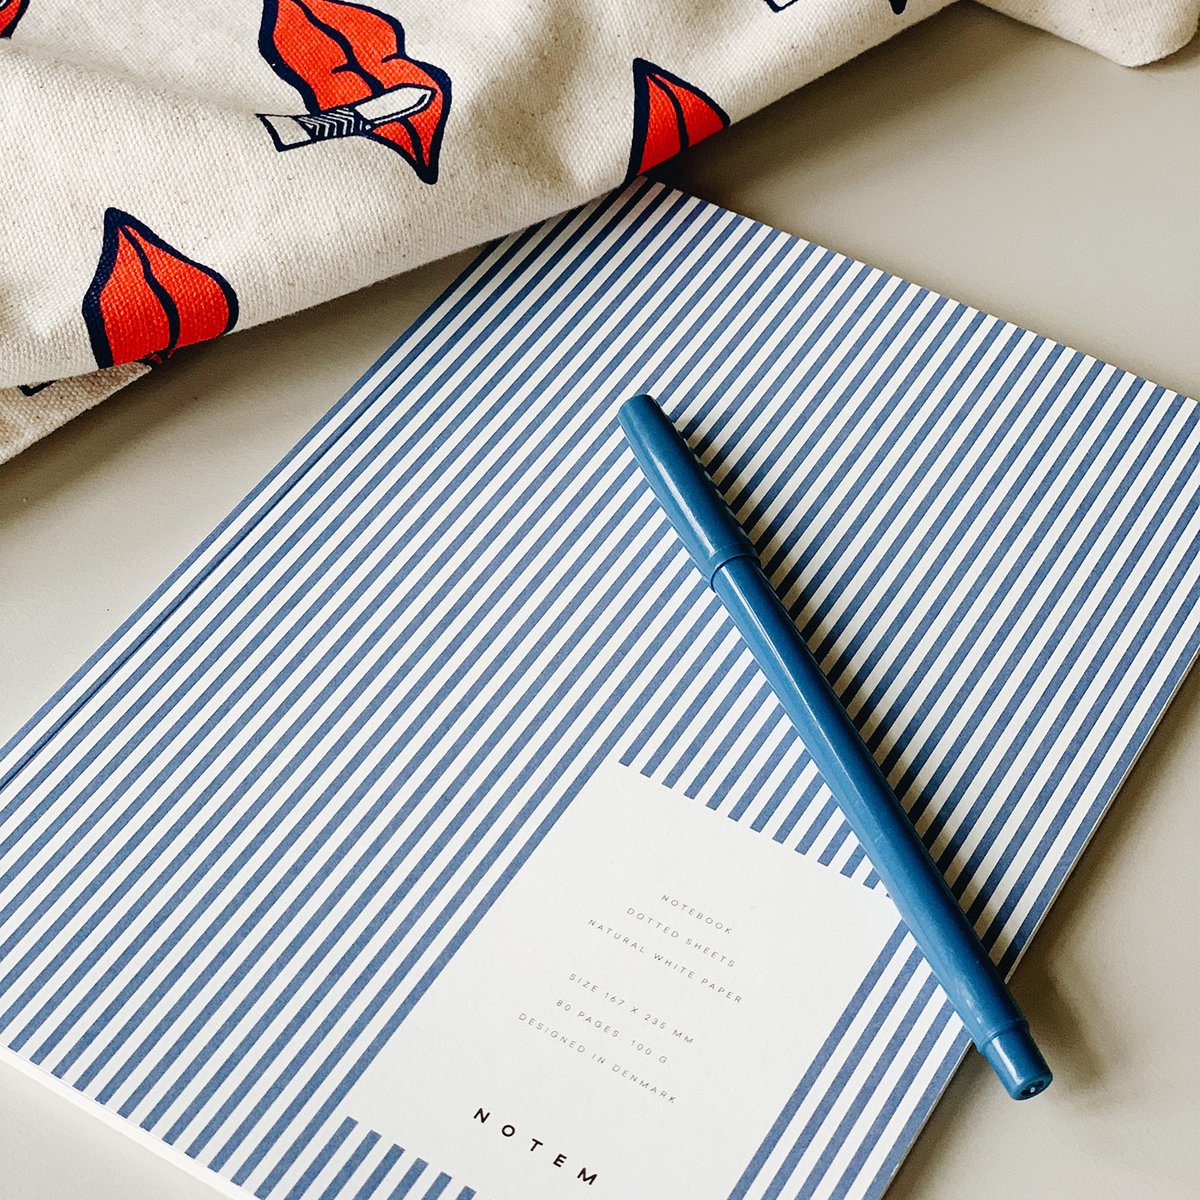 VITA Notebook, Medium - Blue Lines